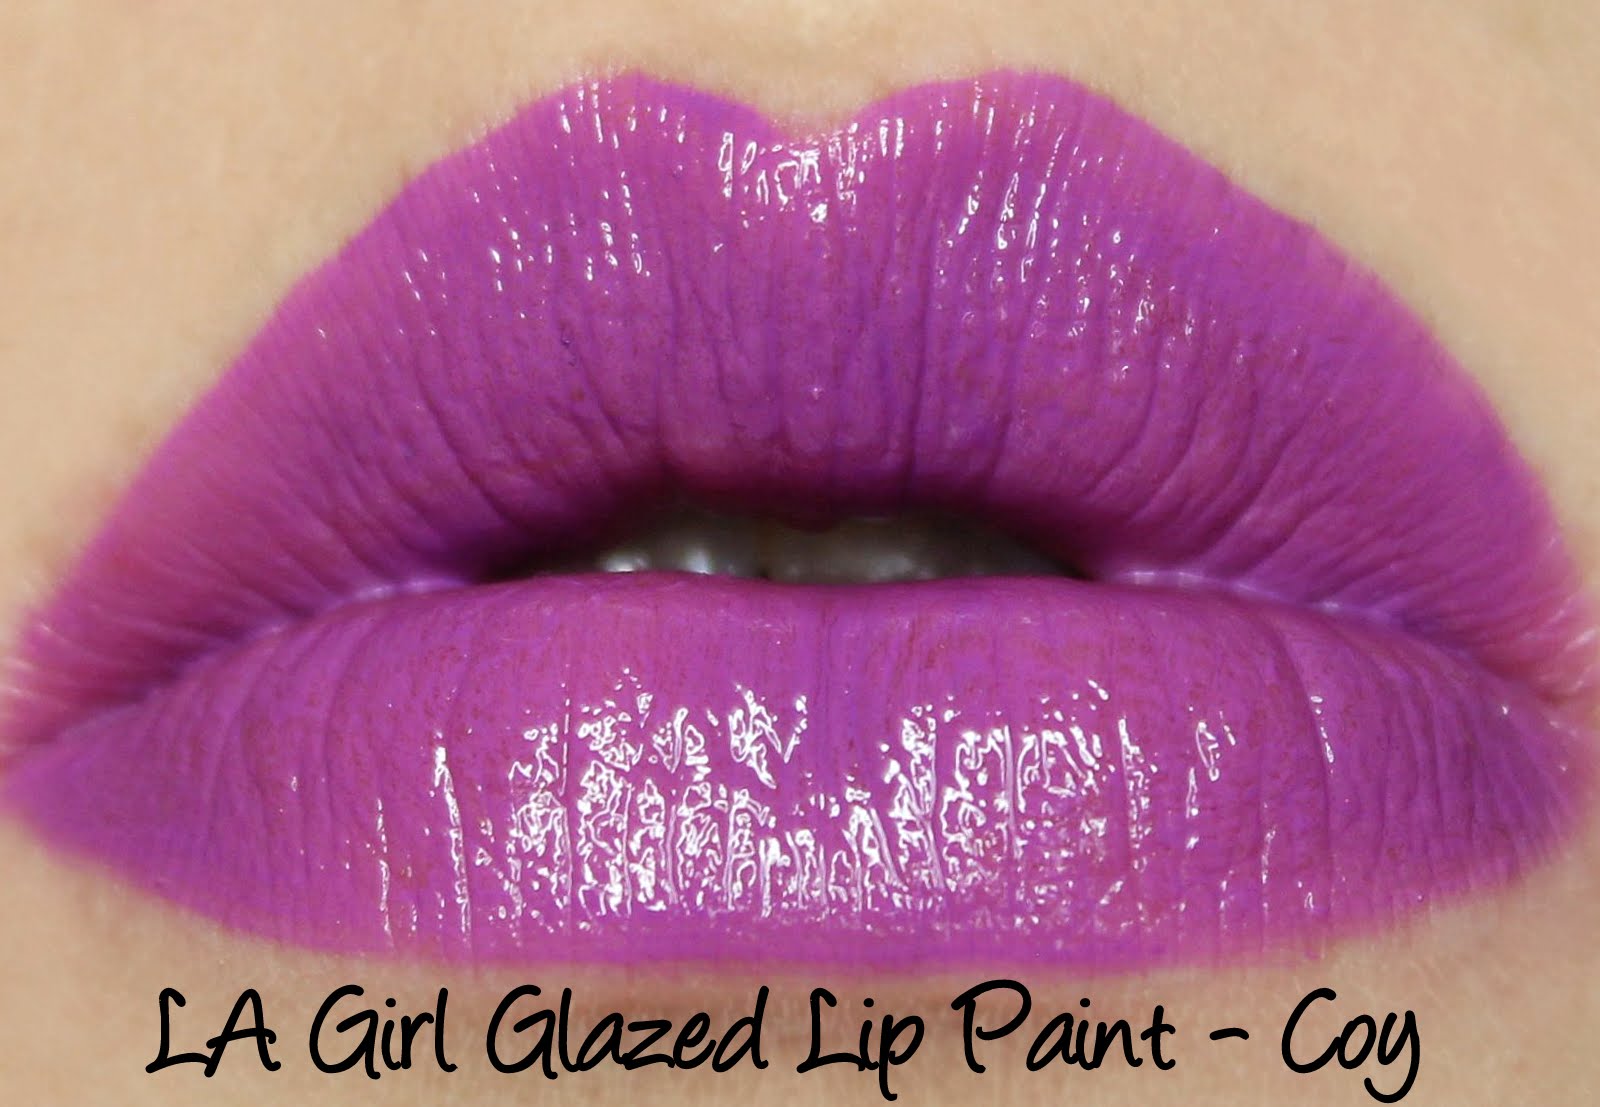 LA Girl Glazed Lip Paints - Coy Swatches & Review